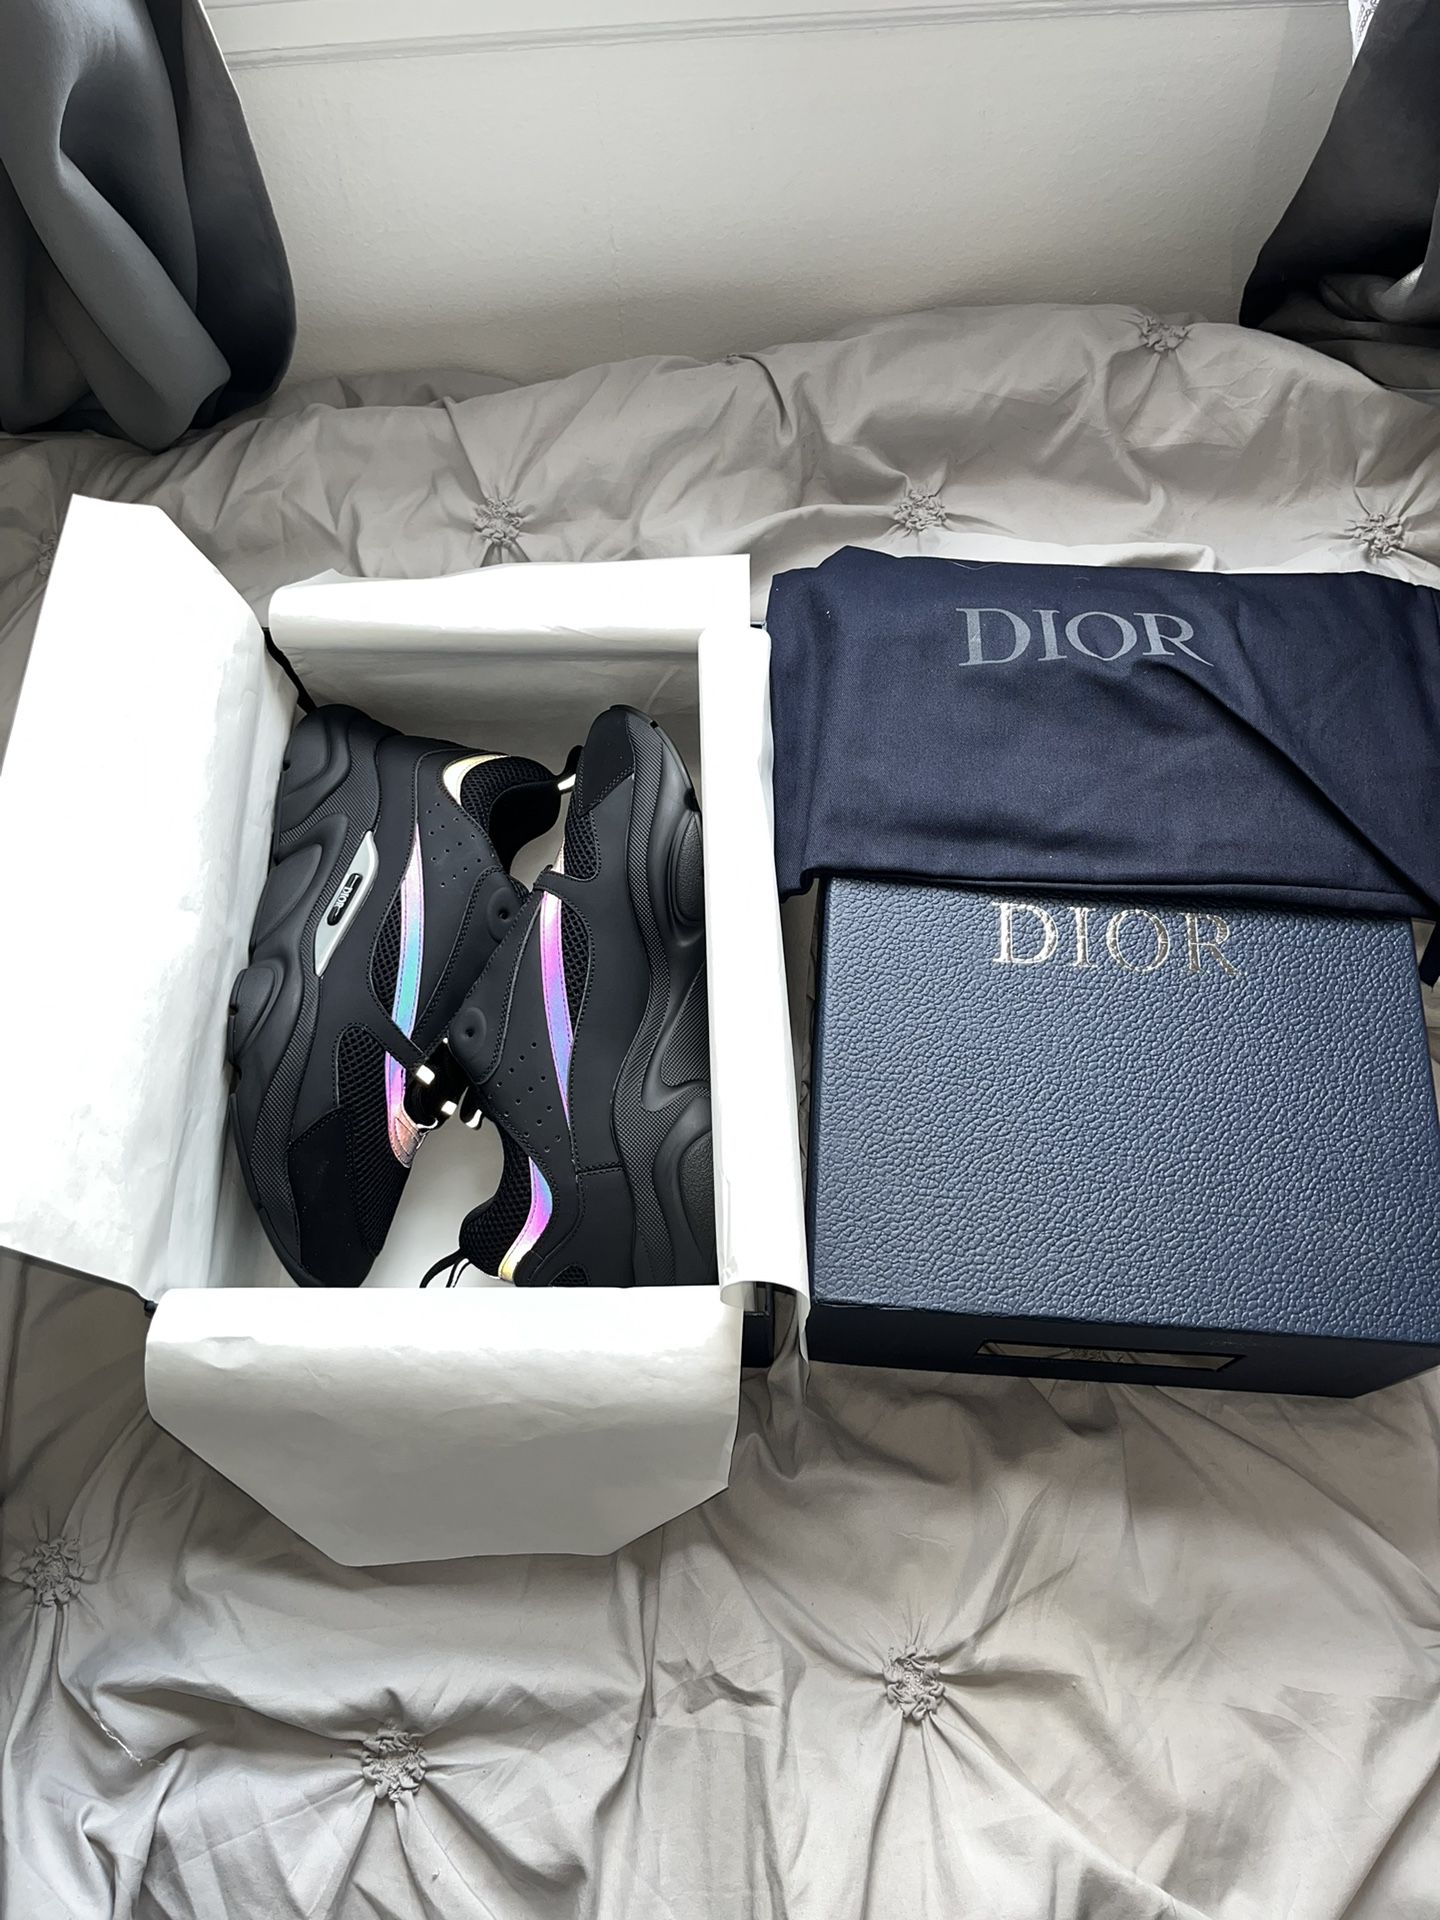 Dior b22 for Sale in Philadelphia, PA - OfferUp